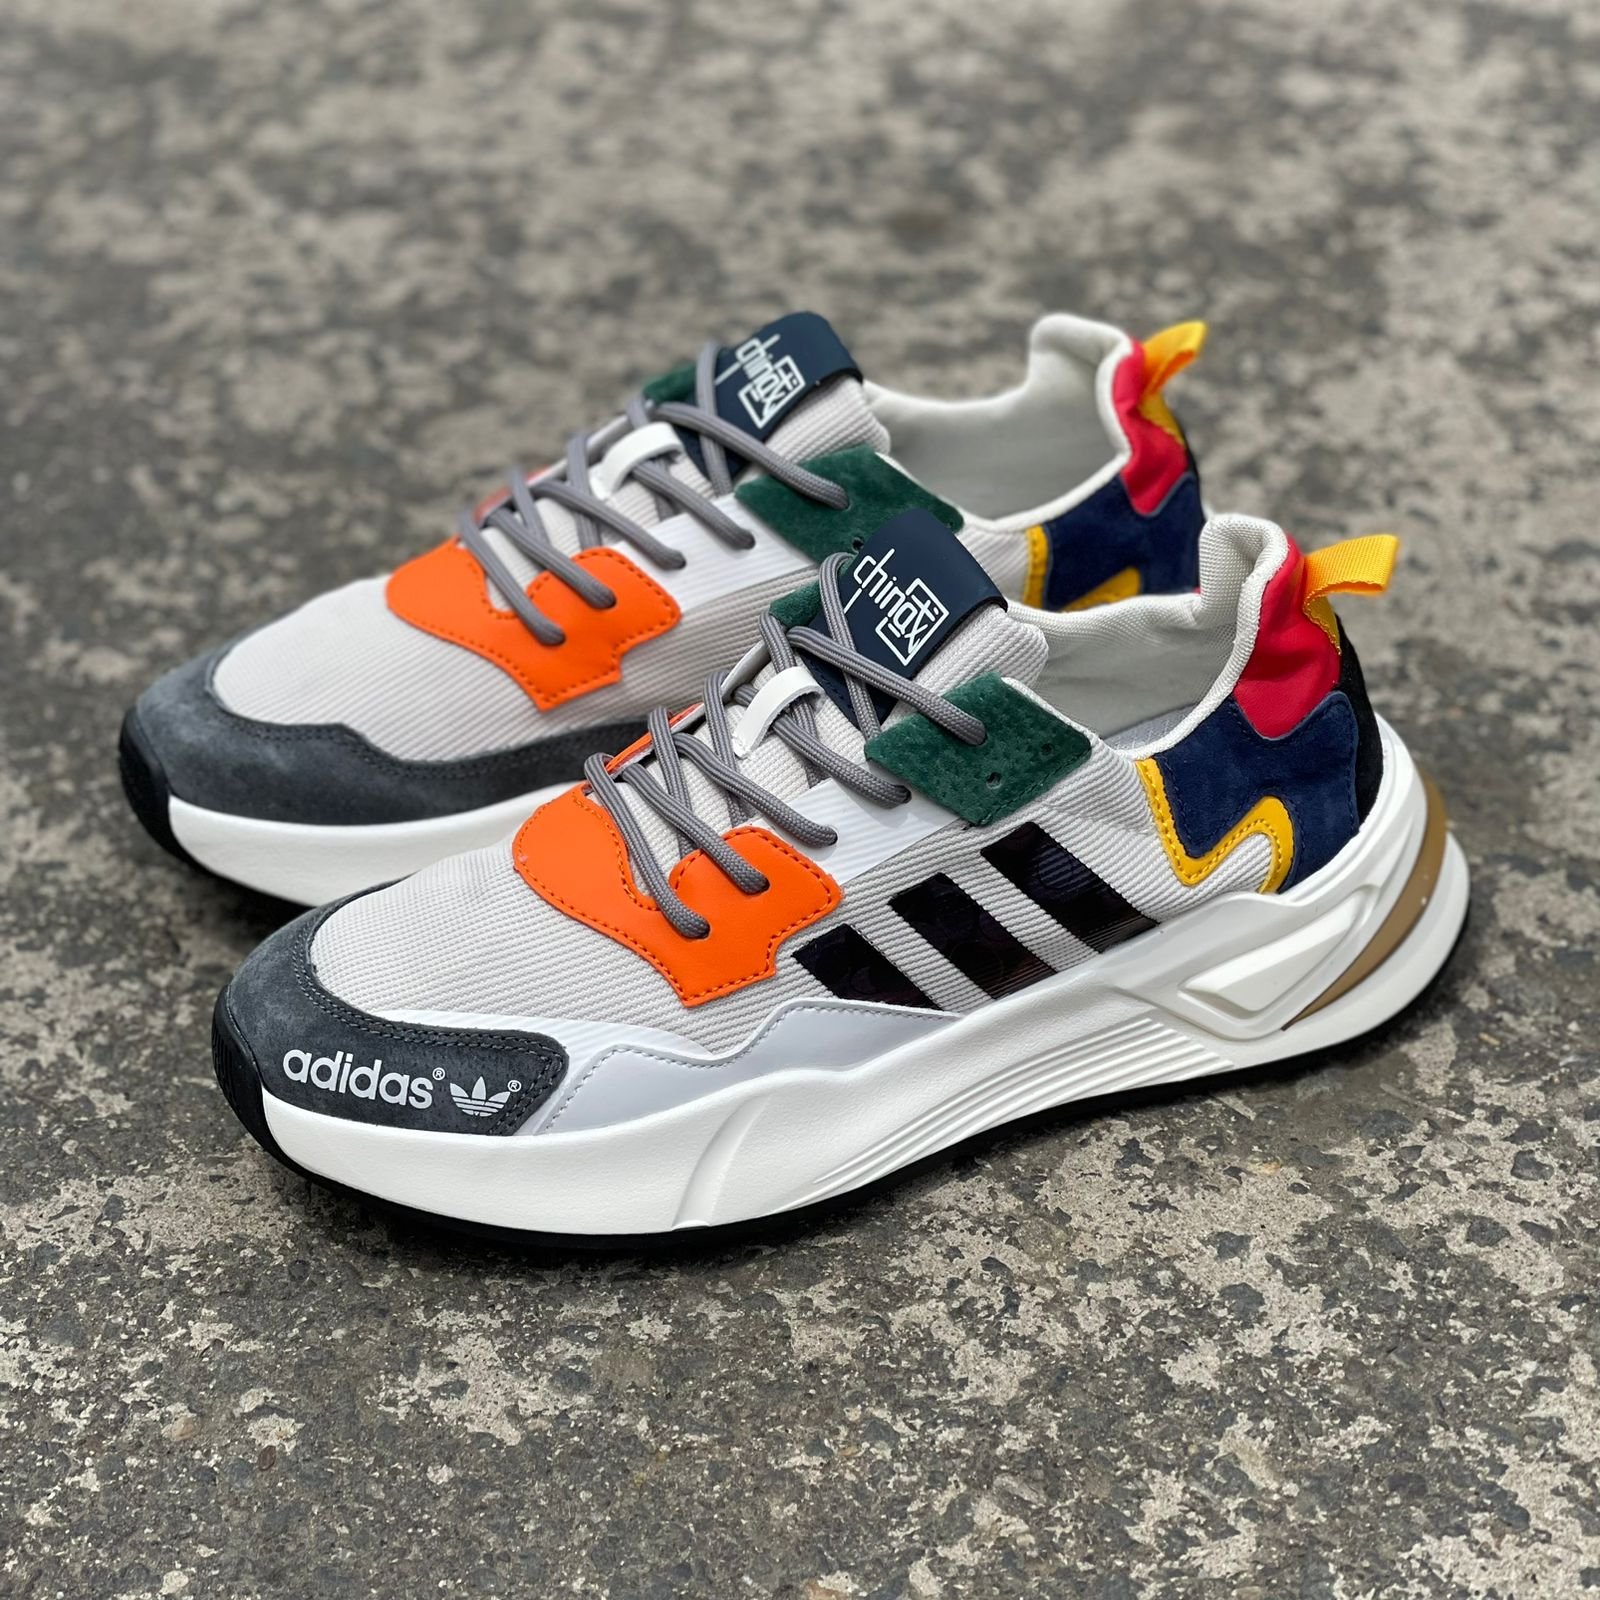 Adidas CHINAx”color” Orange 2.0